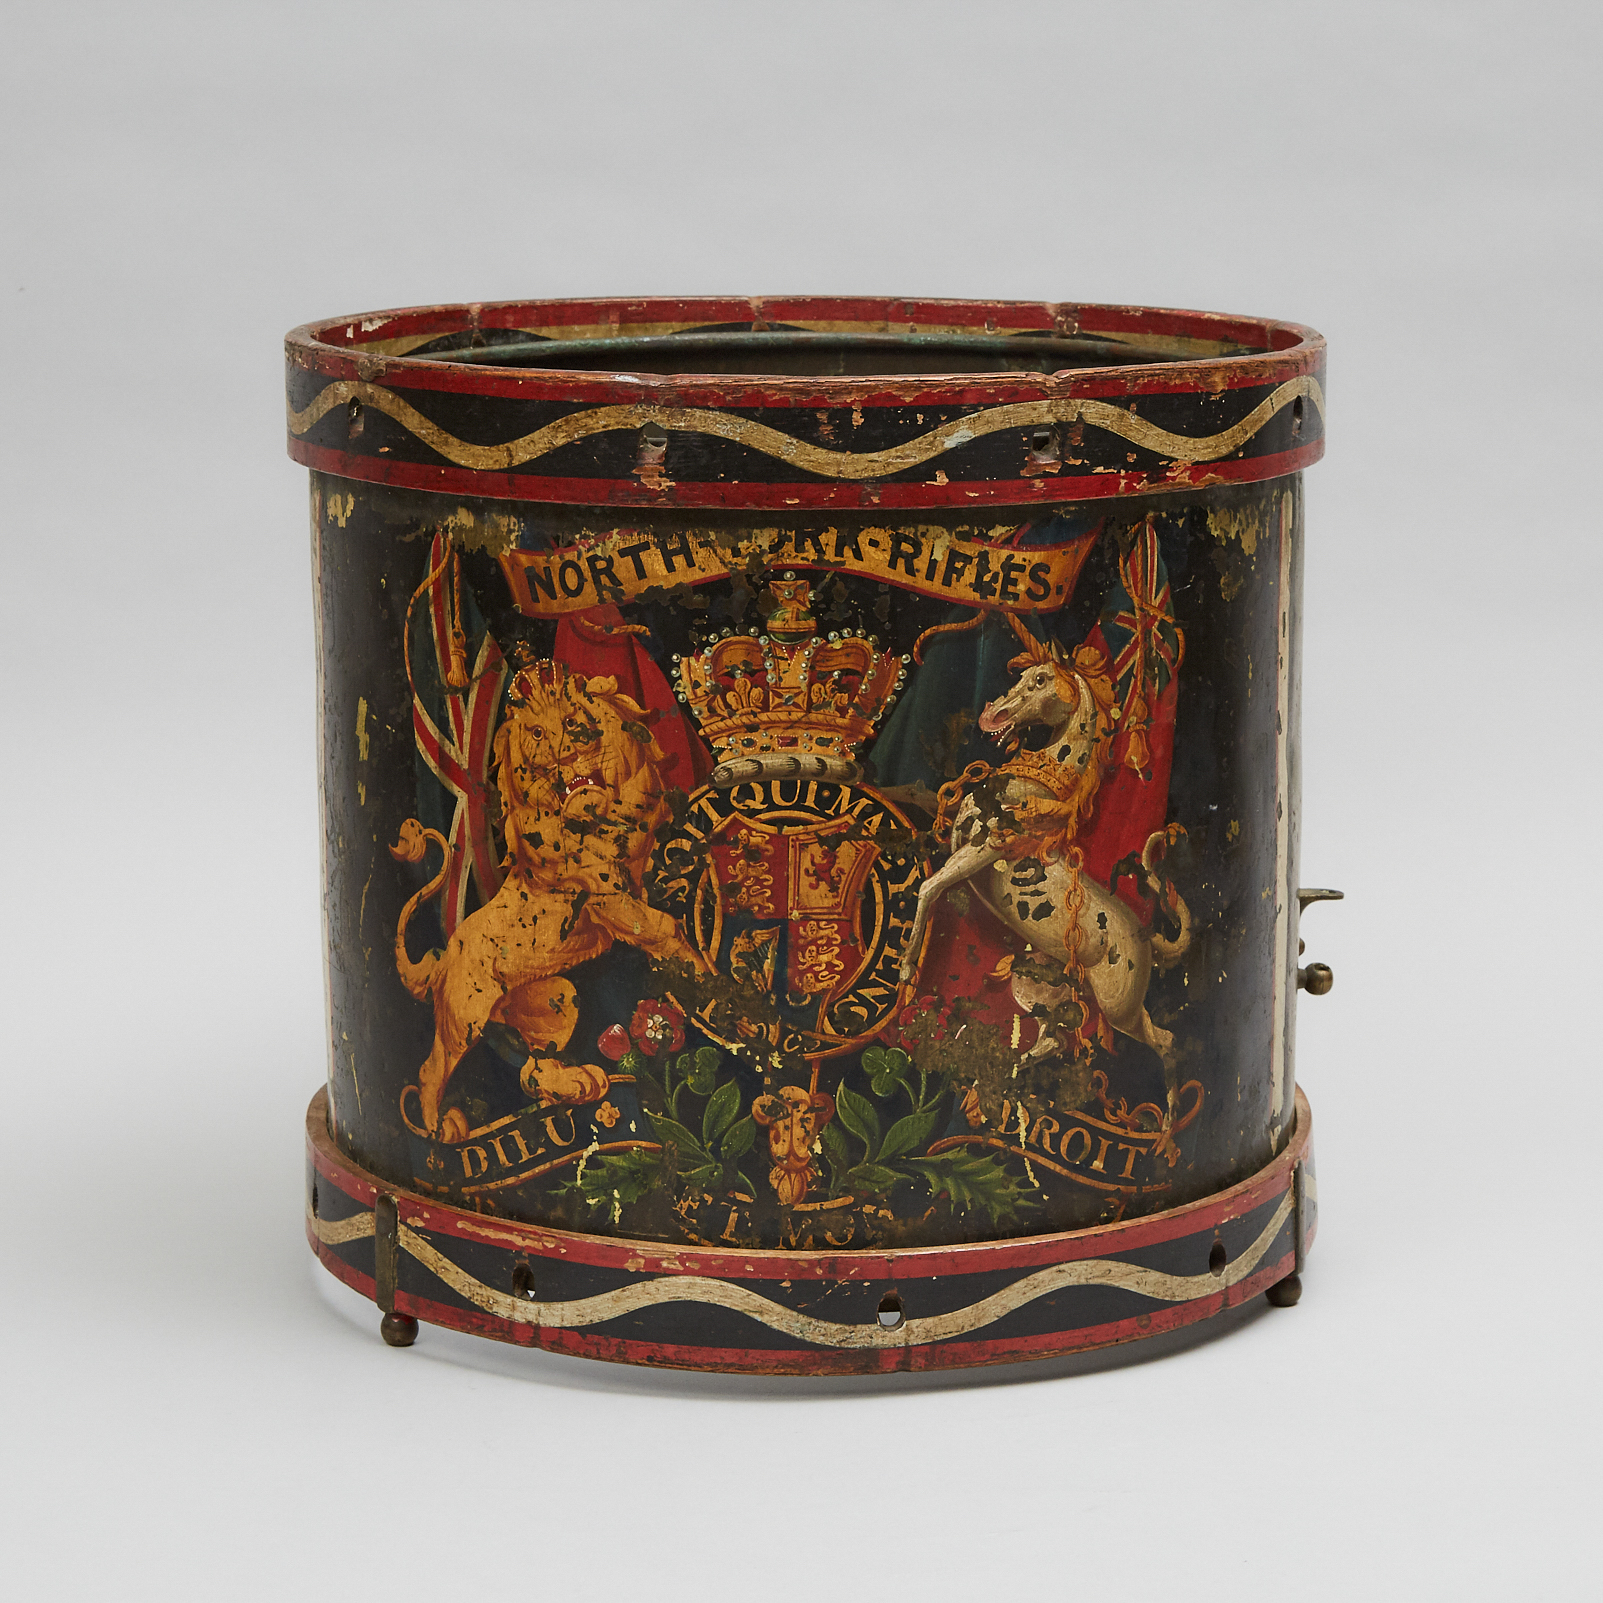 North York Rifles Painted Drum, 19th century